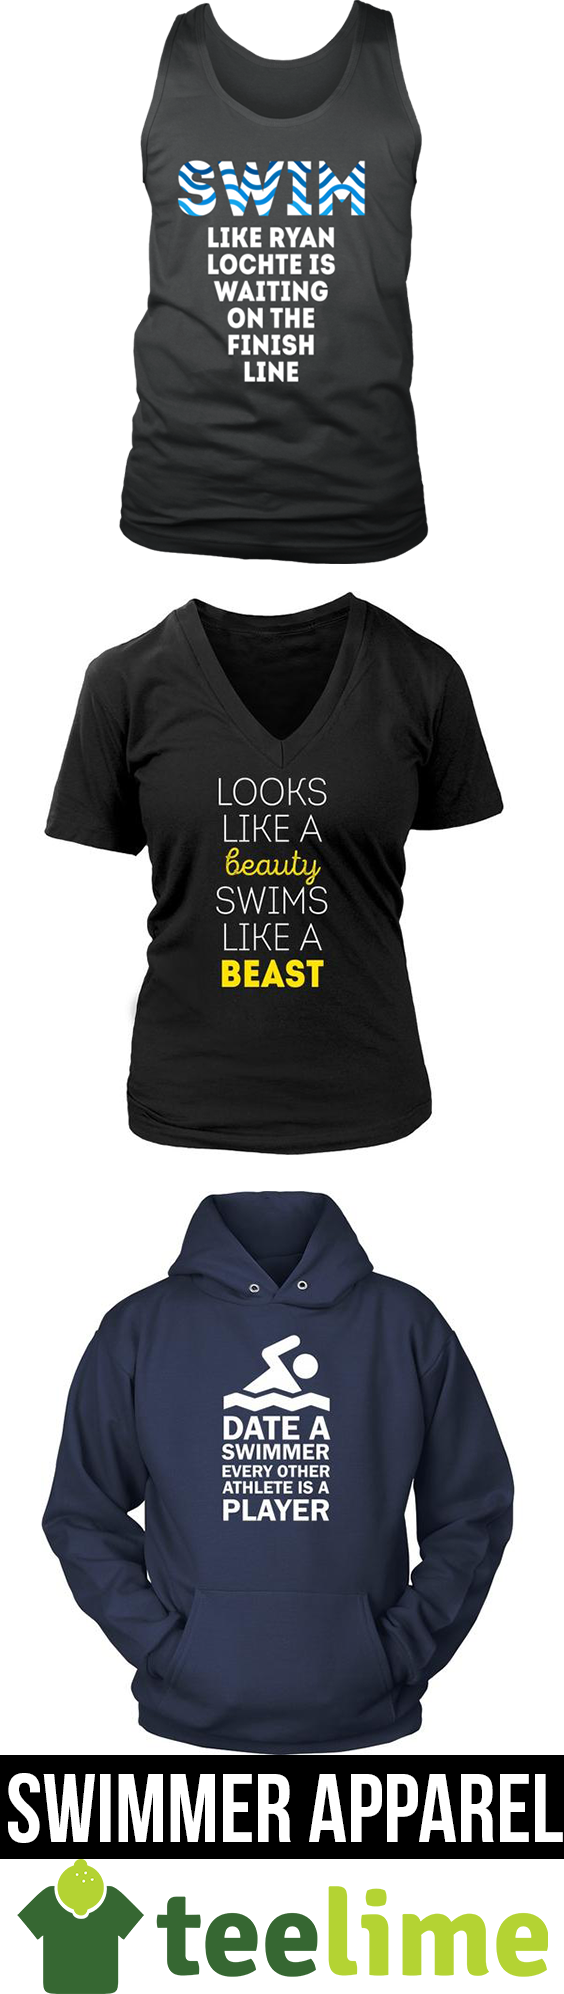 swims shirts swimmers life, swim team shirts, swimmer shirts, swimmer tshirts; cool  tshirts for swimmers in ZVYMMPA